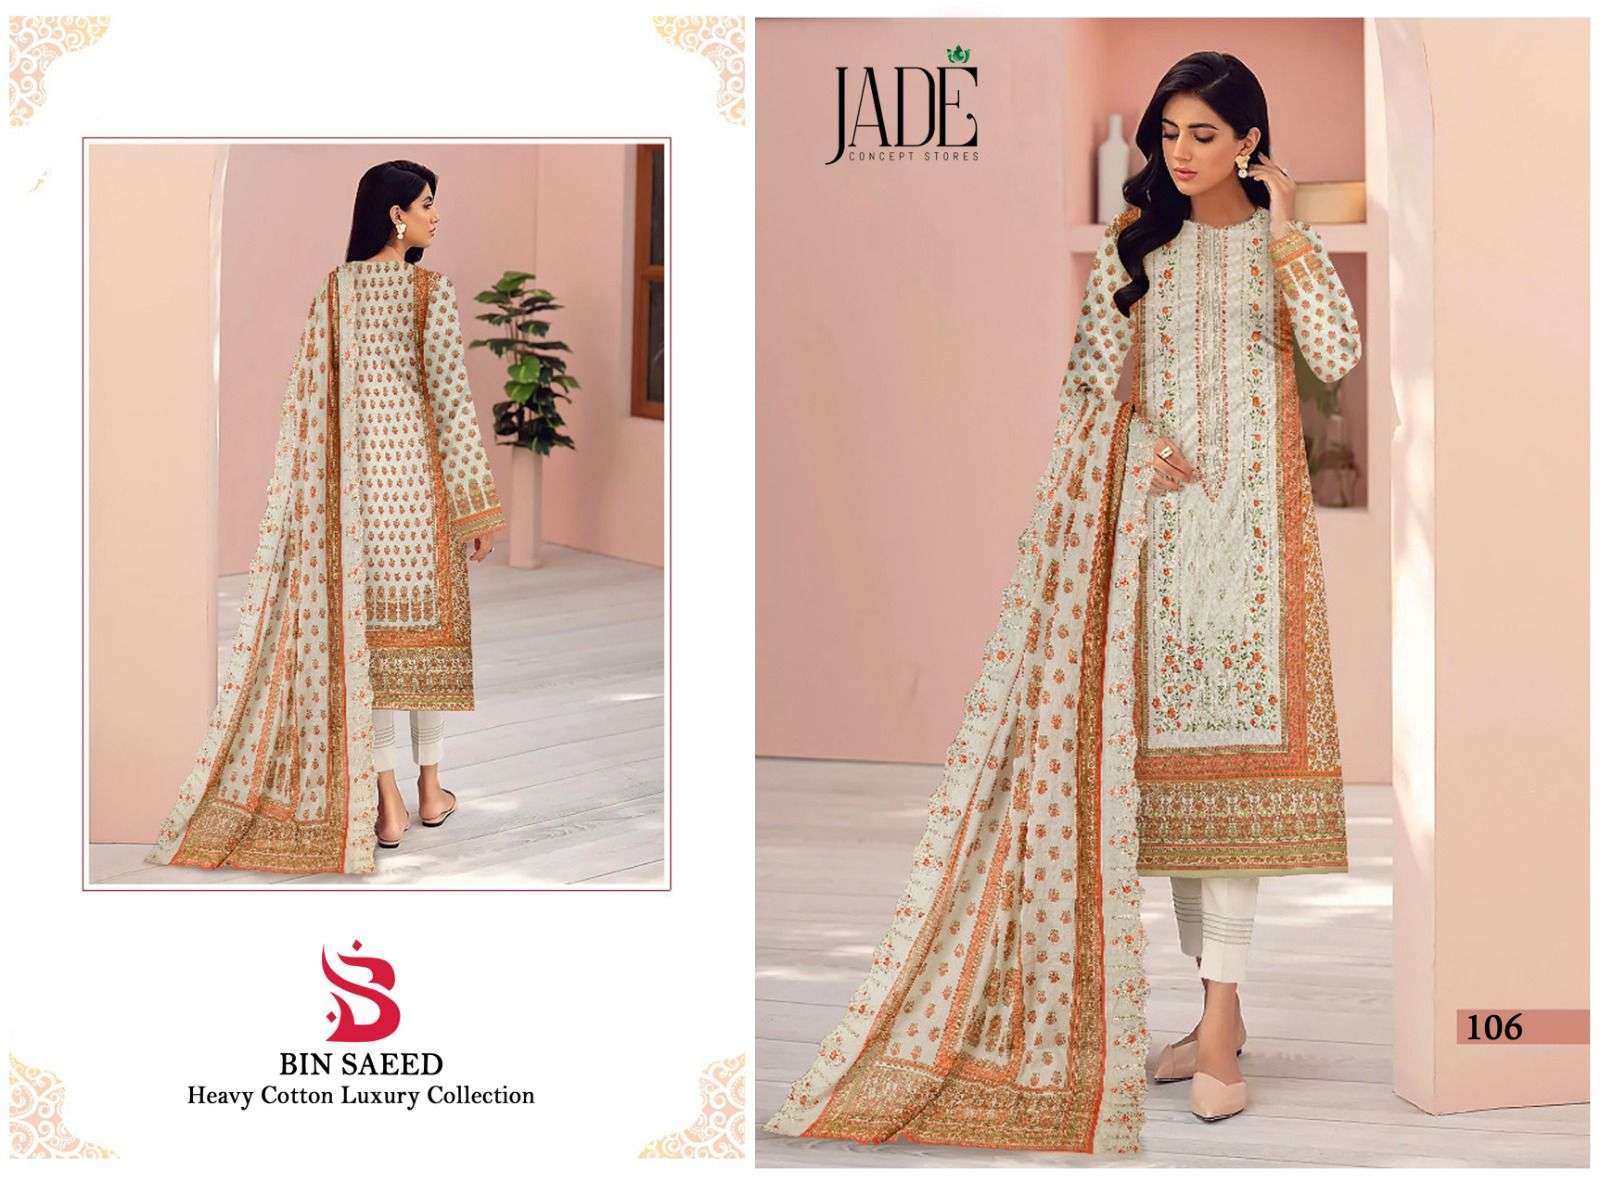 Jade Bin Saeed dress materials